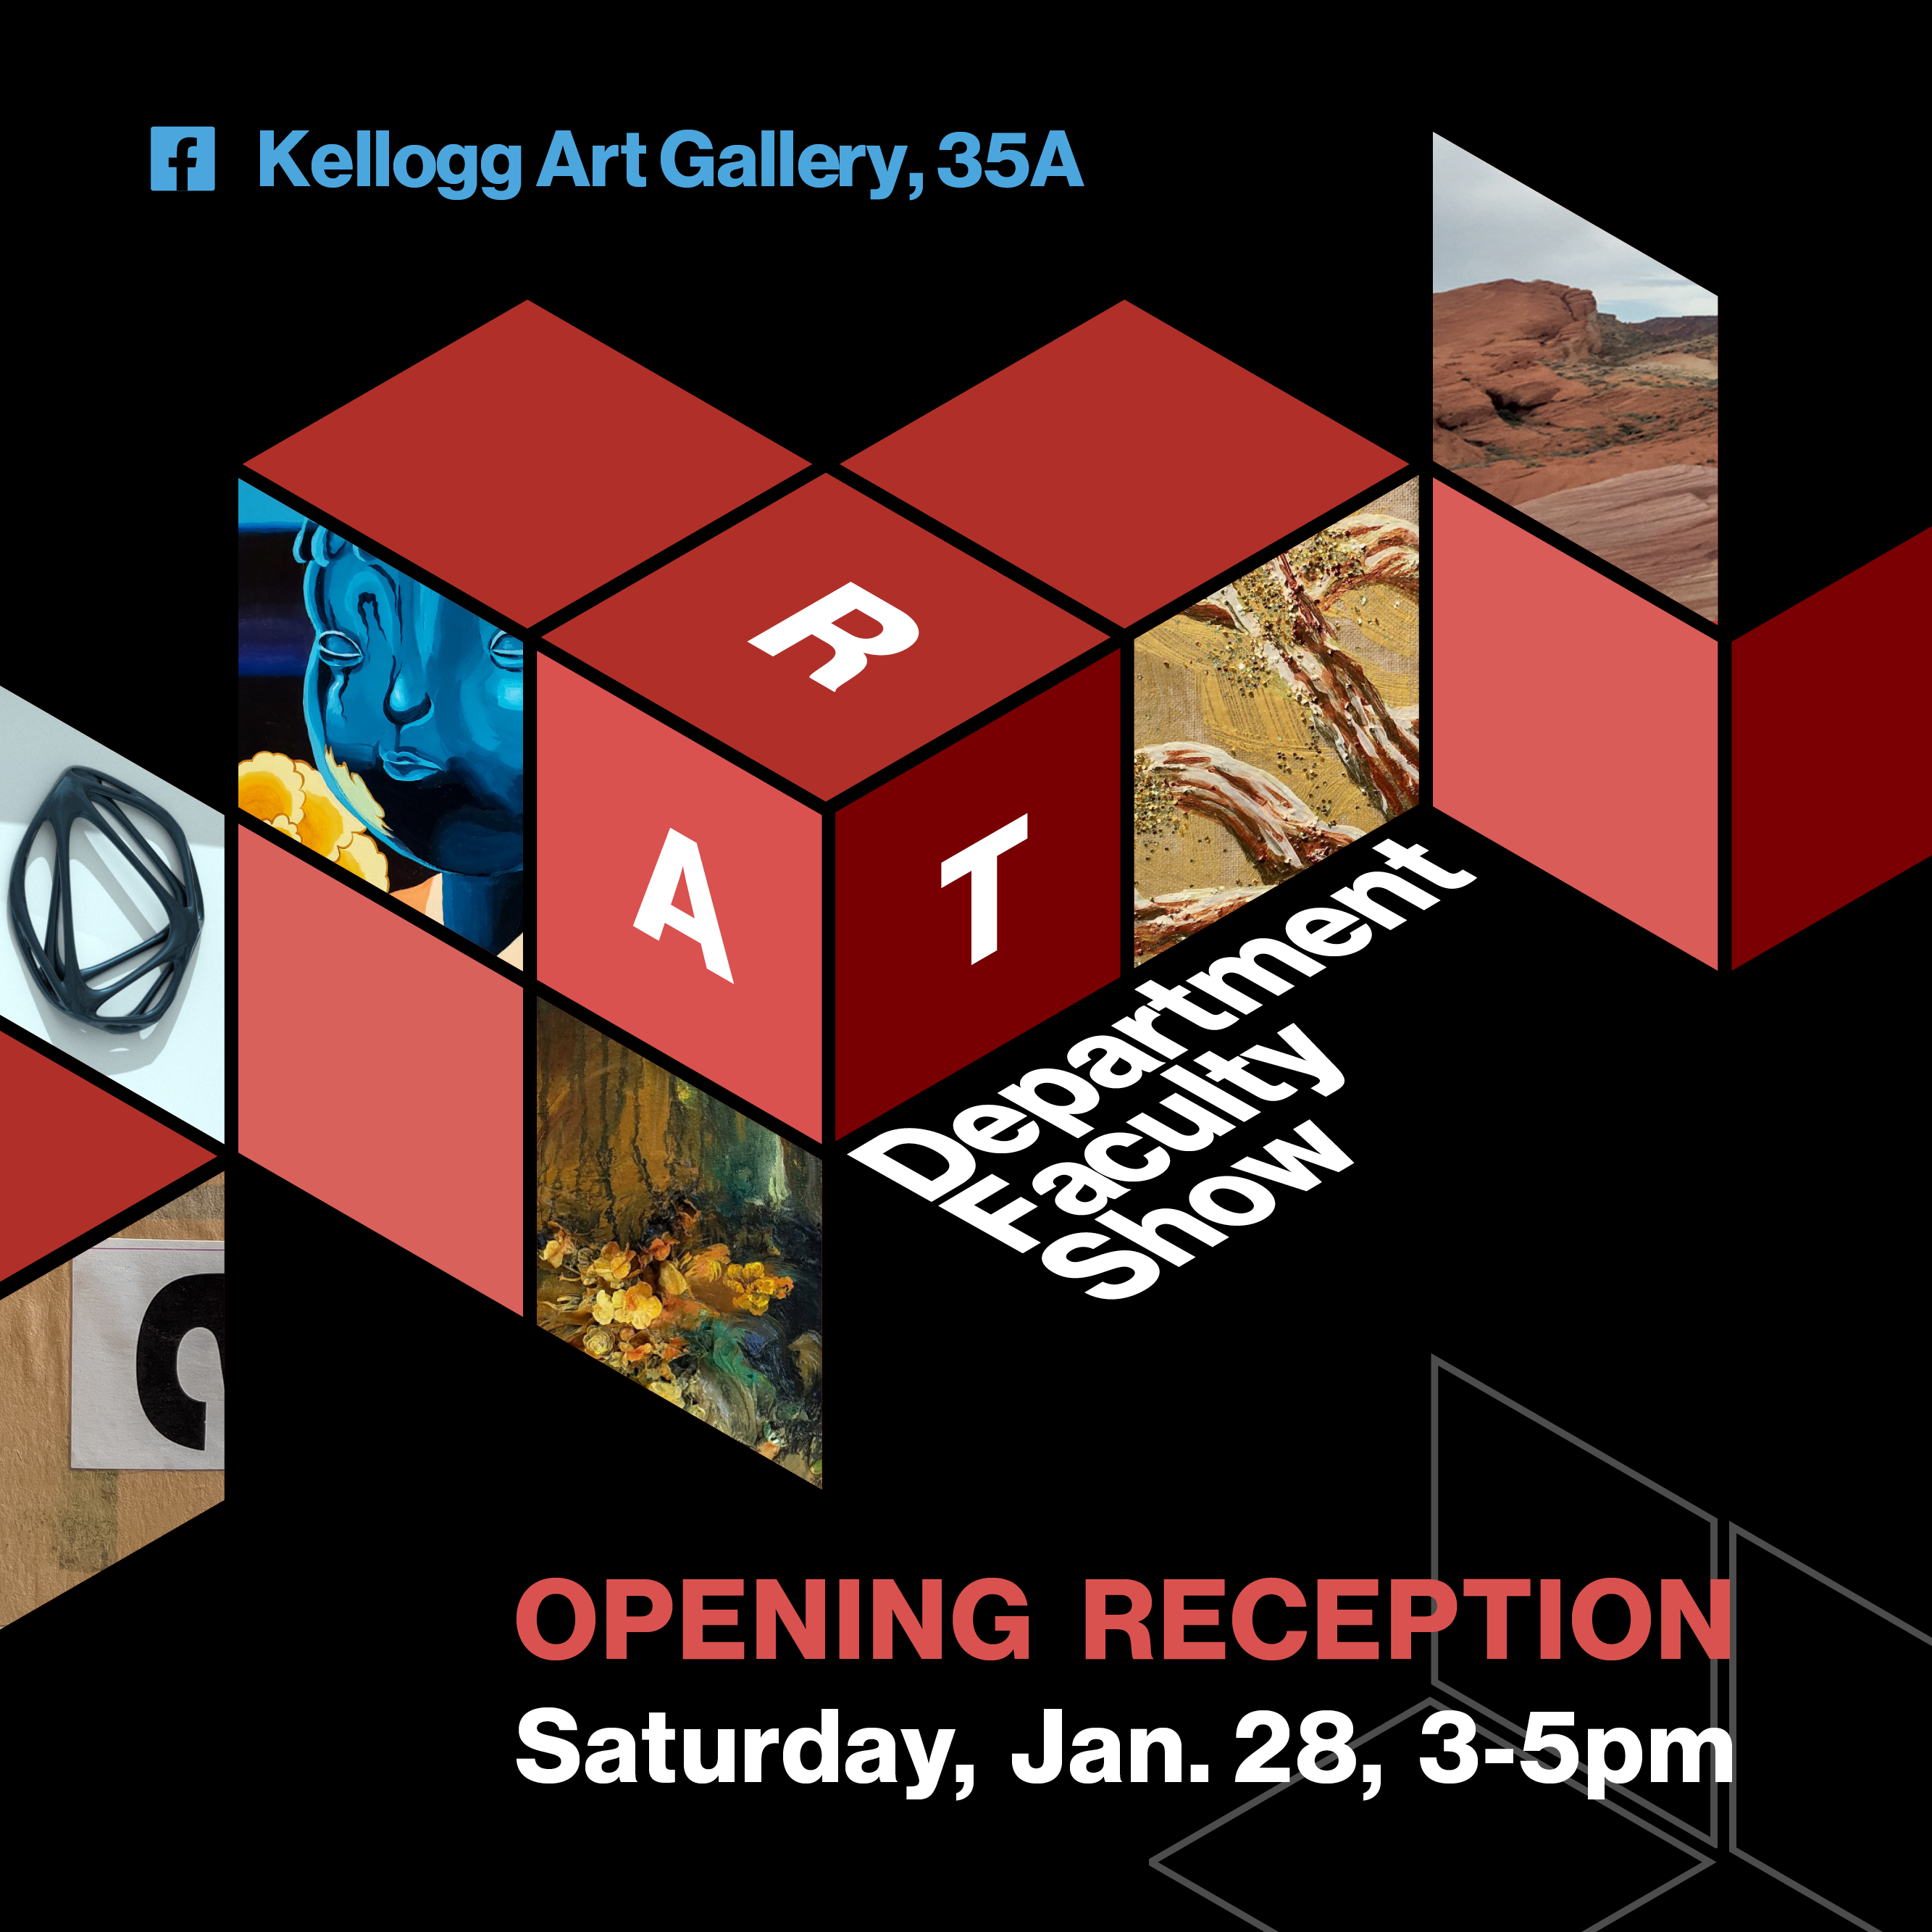 Kellogg art gallery art department faculty show talk & tour tuesday march 14 